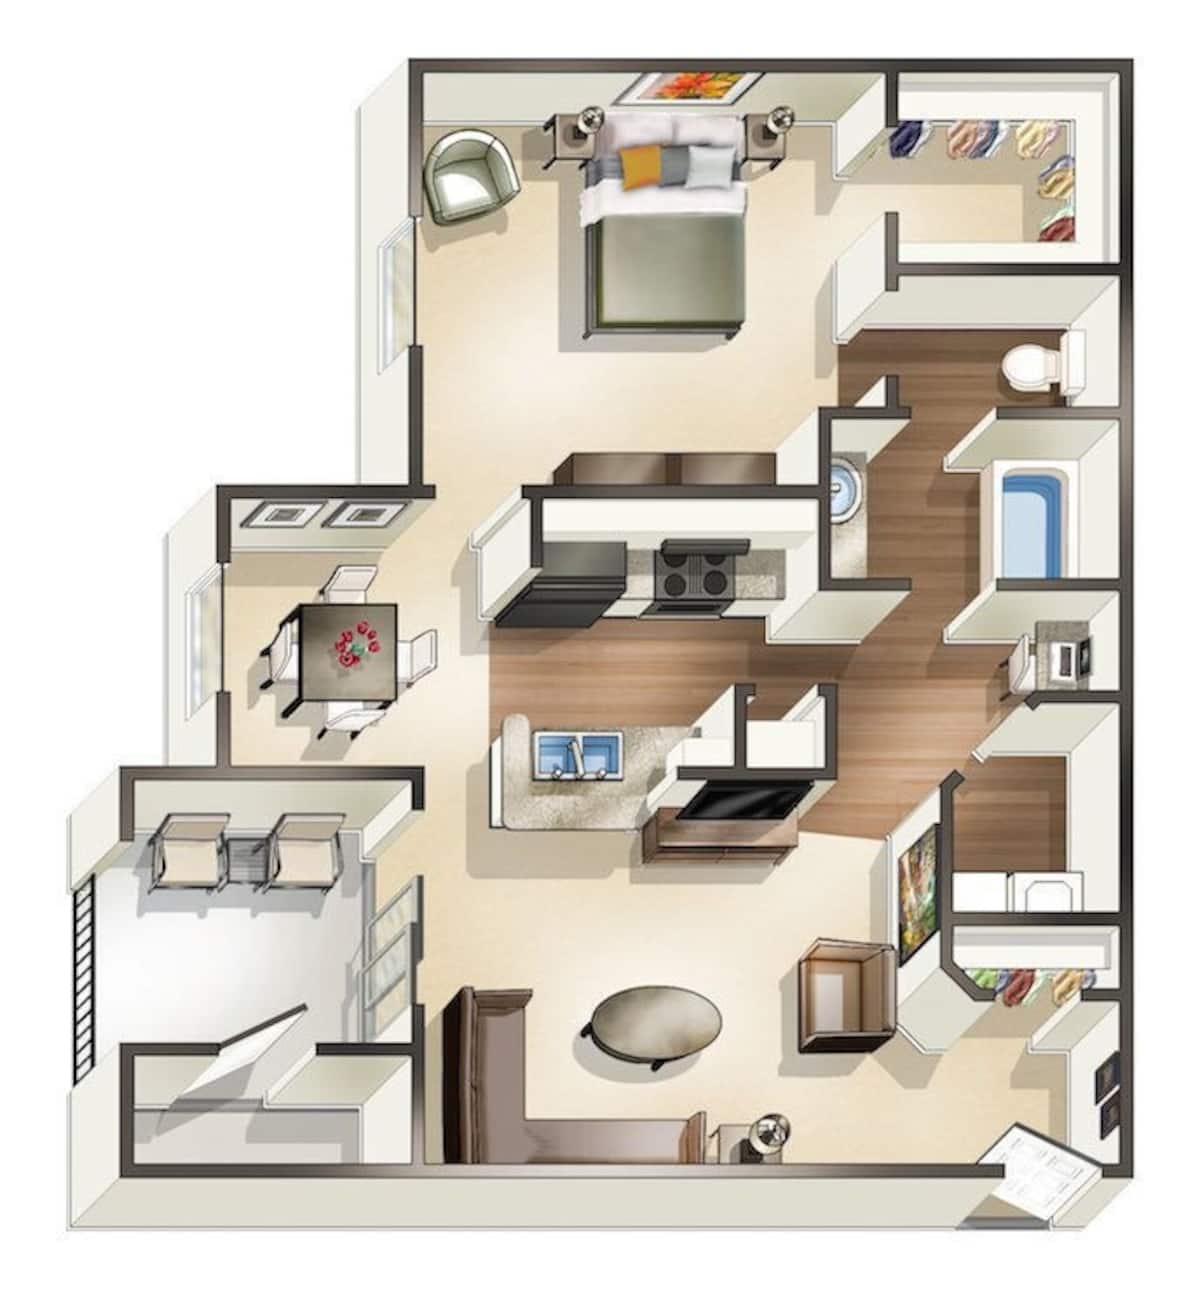 Floorplan diagram for A1C - R3, showing 1 bedroom